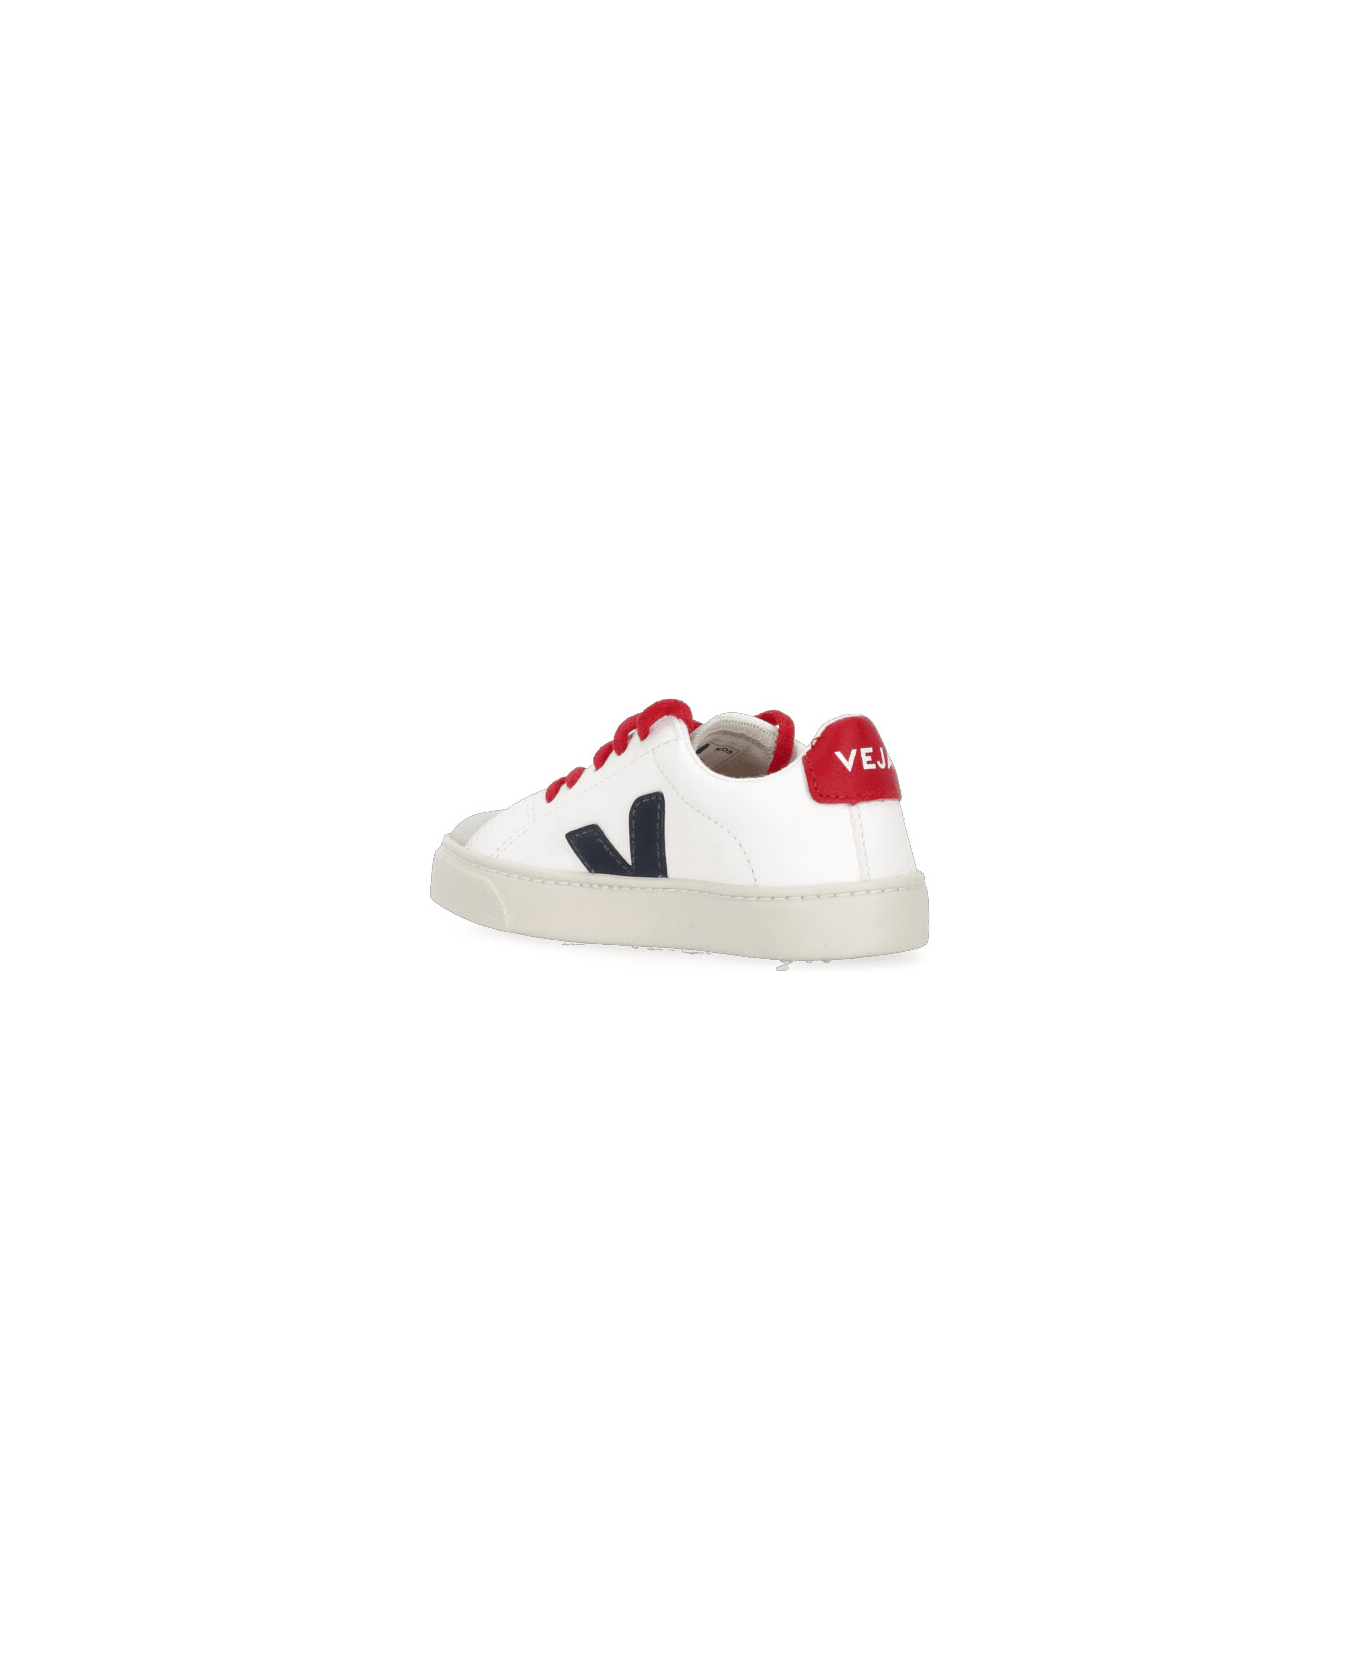 Veja Esplar Sneakers - Red